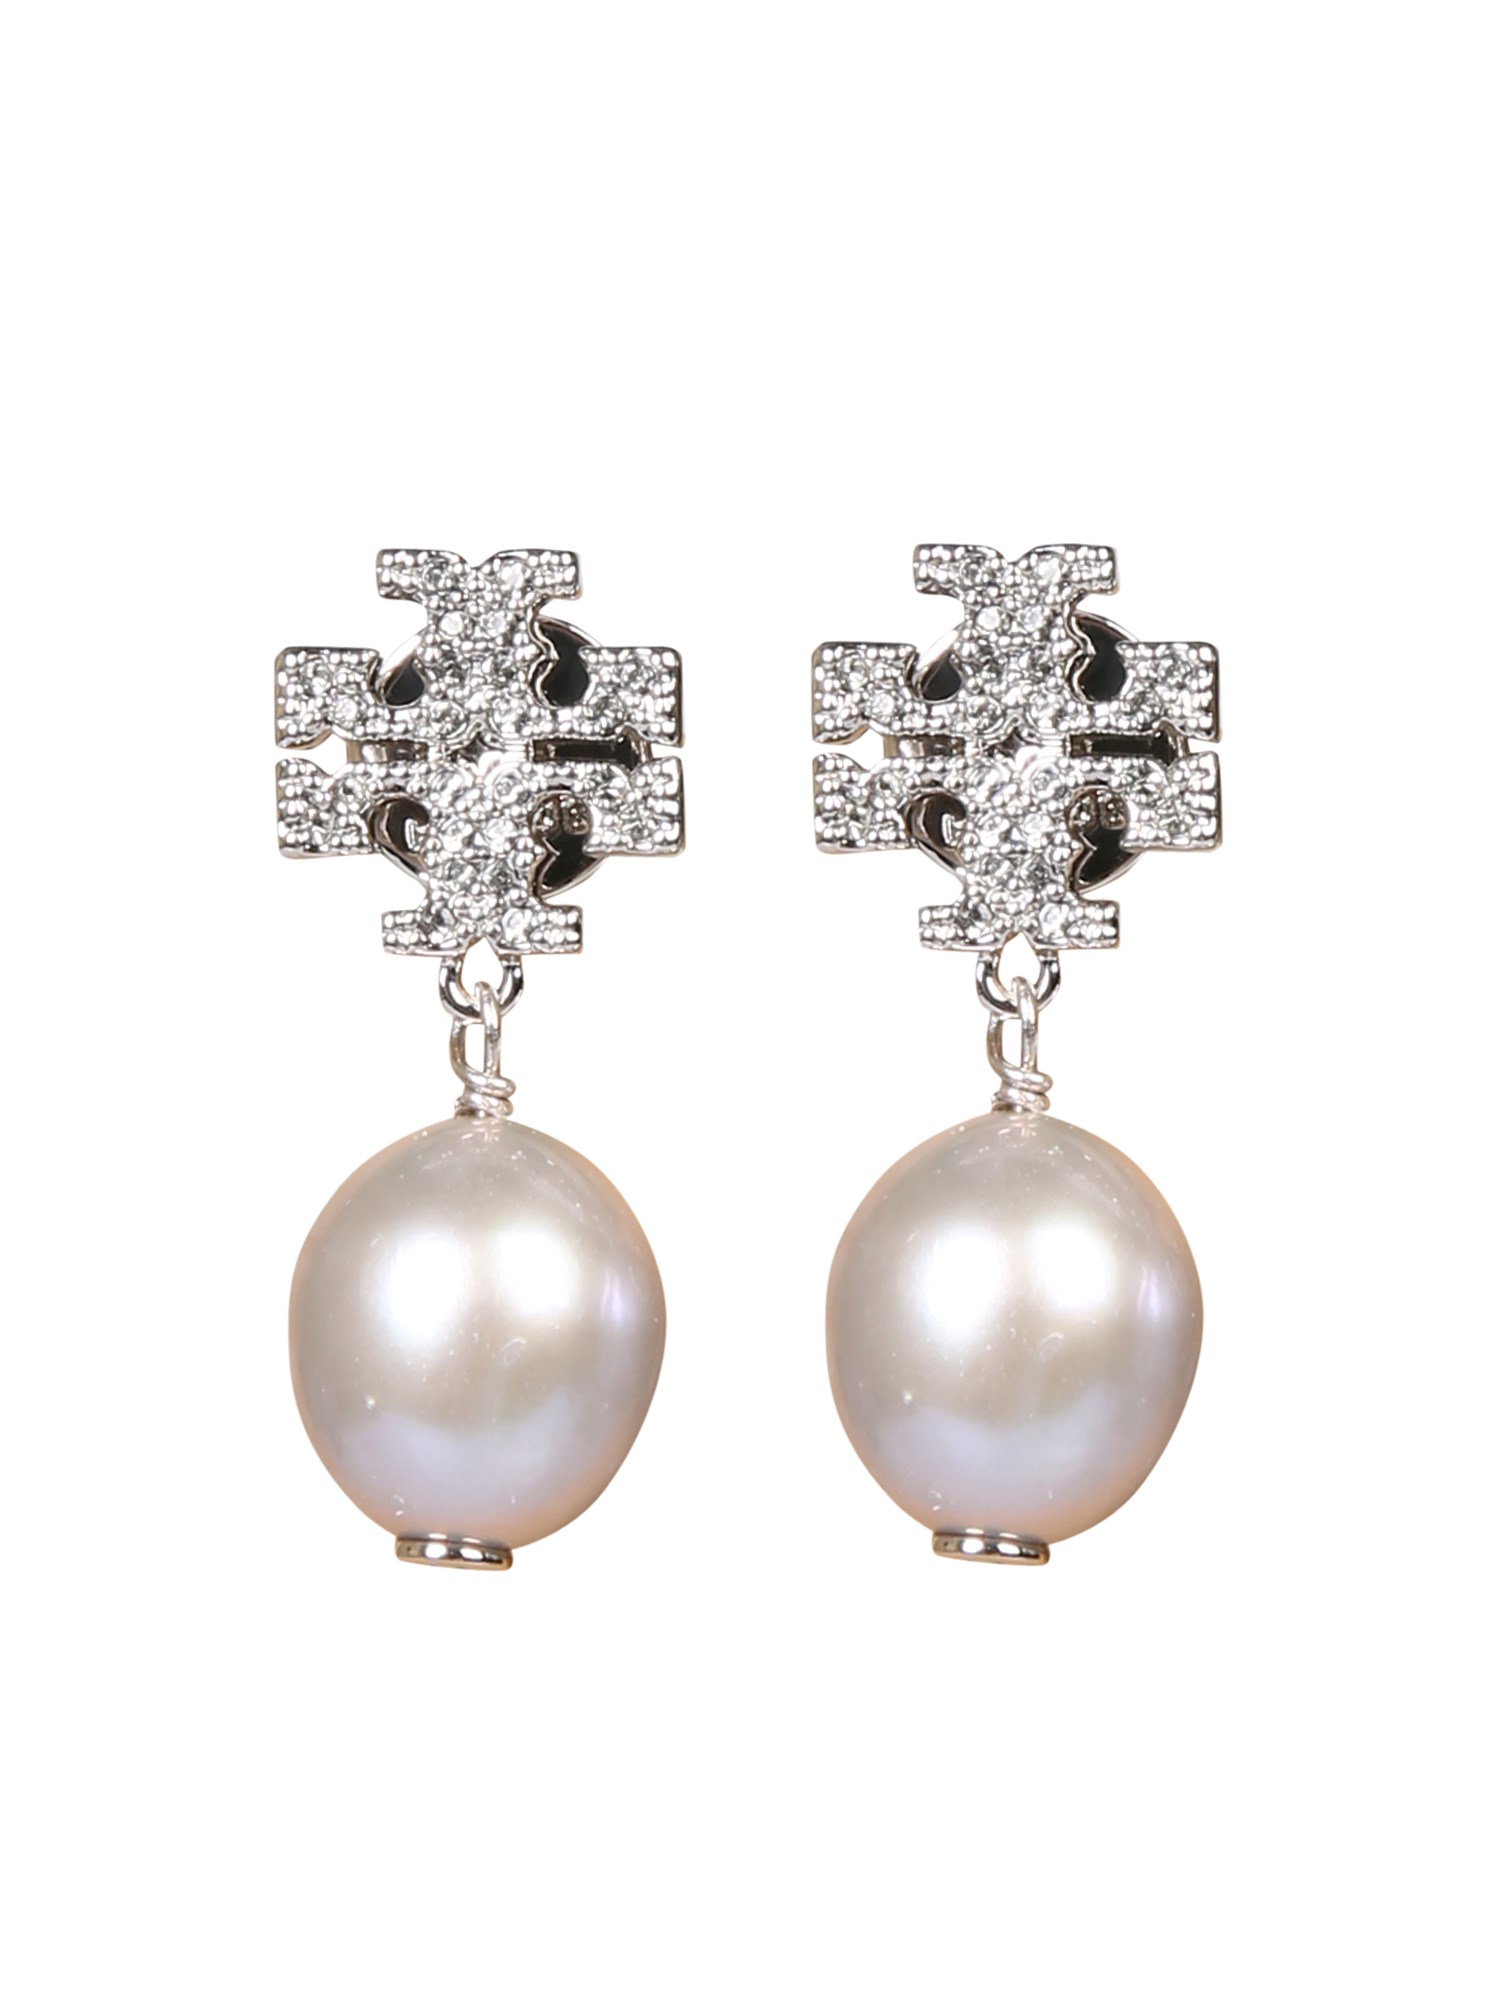 tory burch kira earrings with pearl